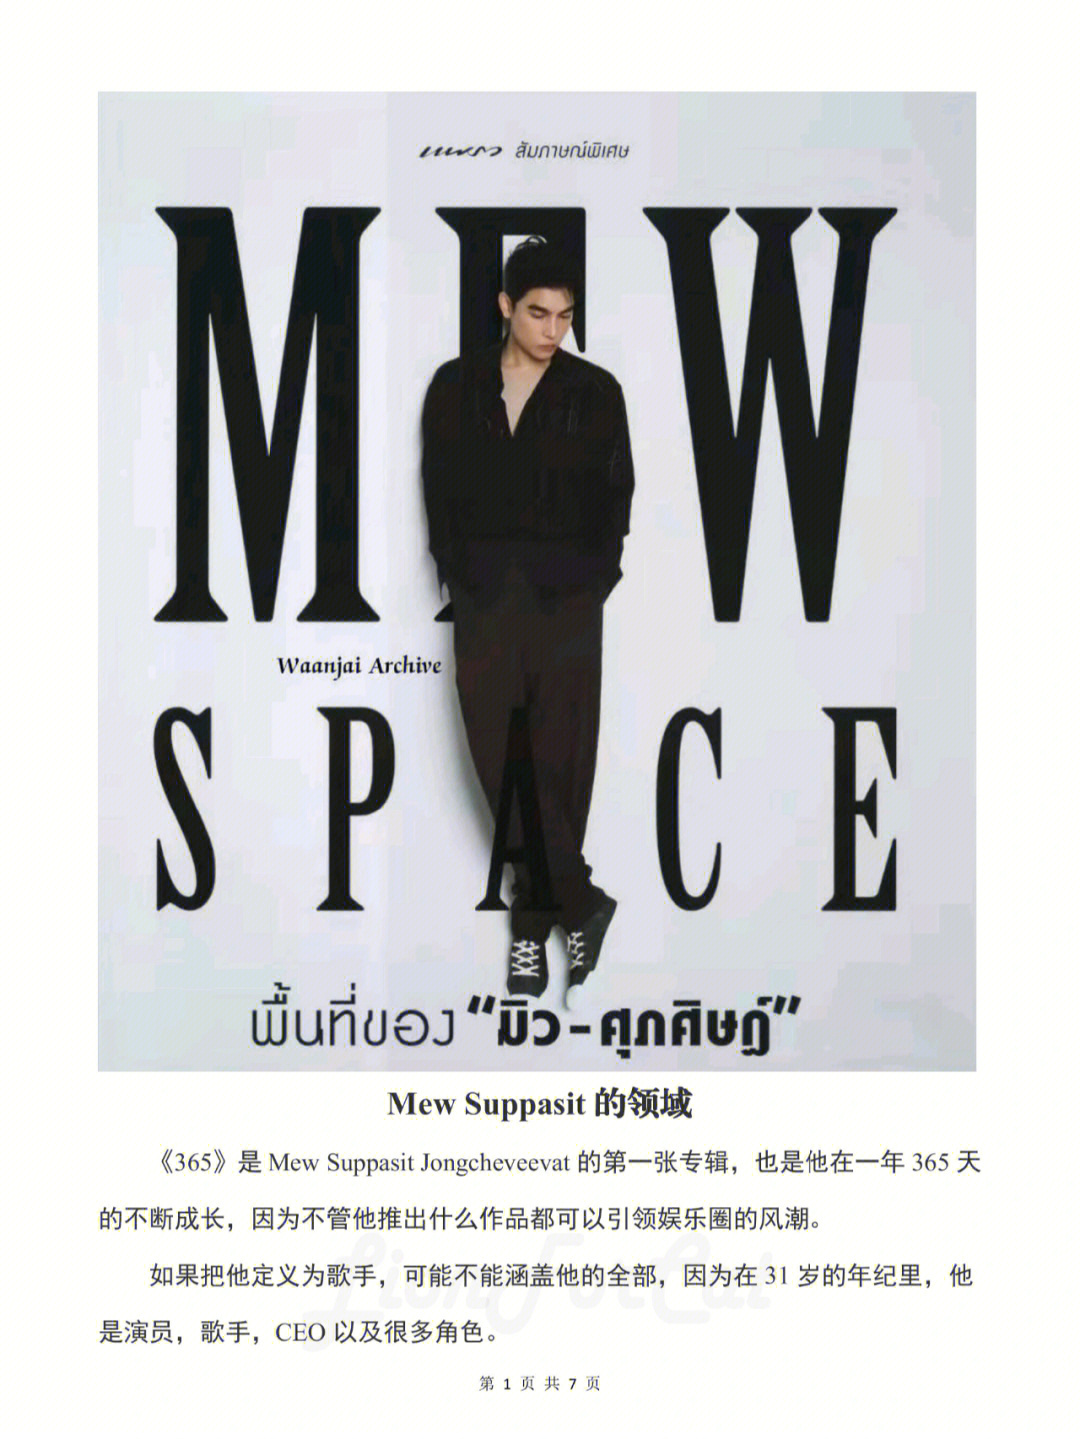 mewpraew二月刊杂志采访翻译